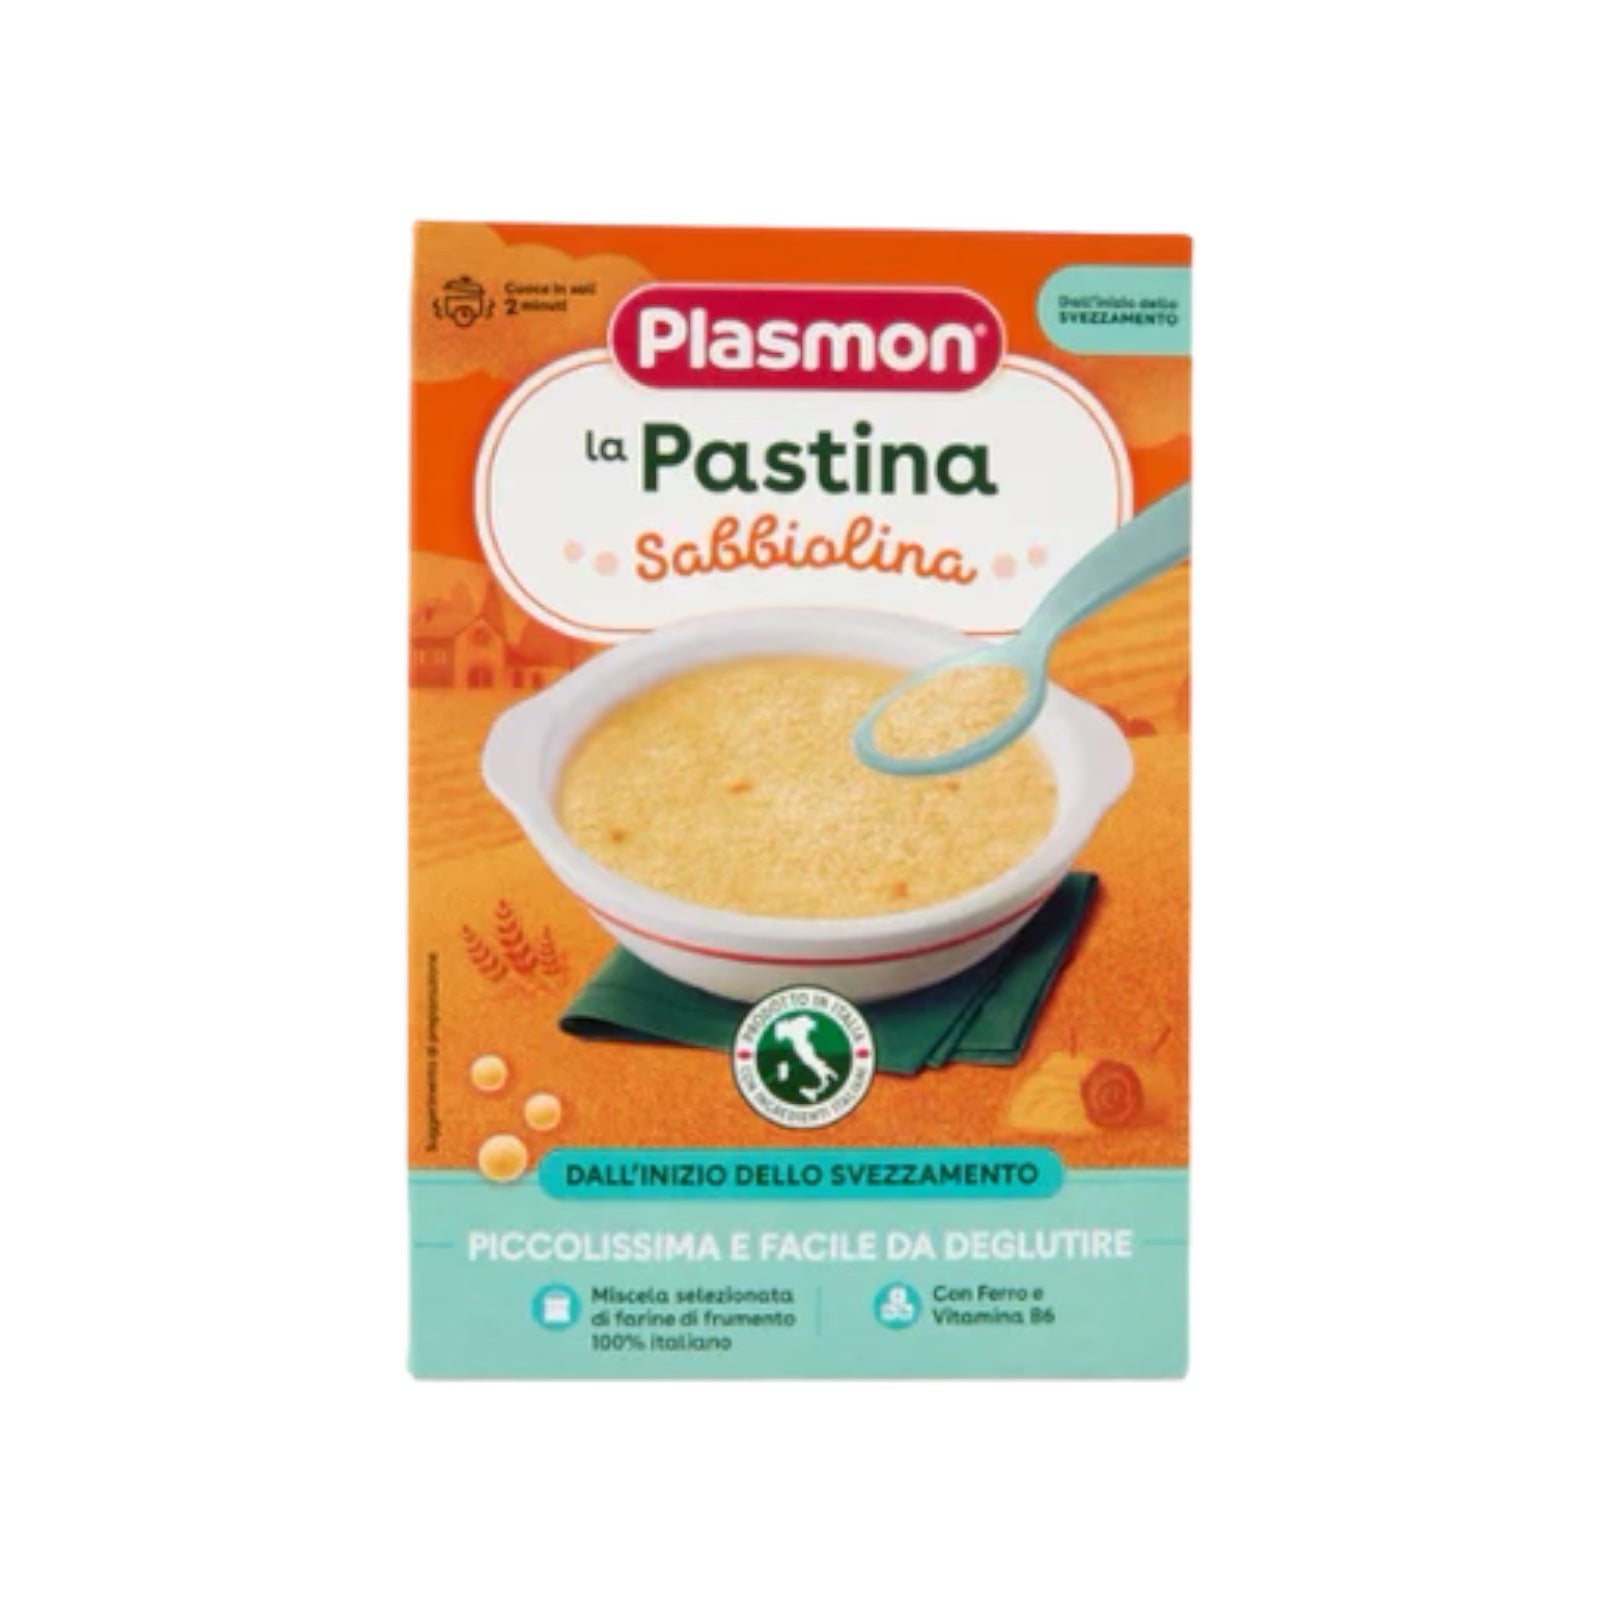 Testpaket Plasmon La Pastina Babynahrung nudeln ab 4 Monaten 1x300g 2x –  Italian Gourmet